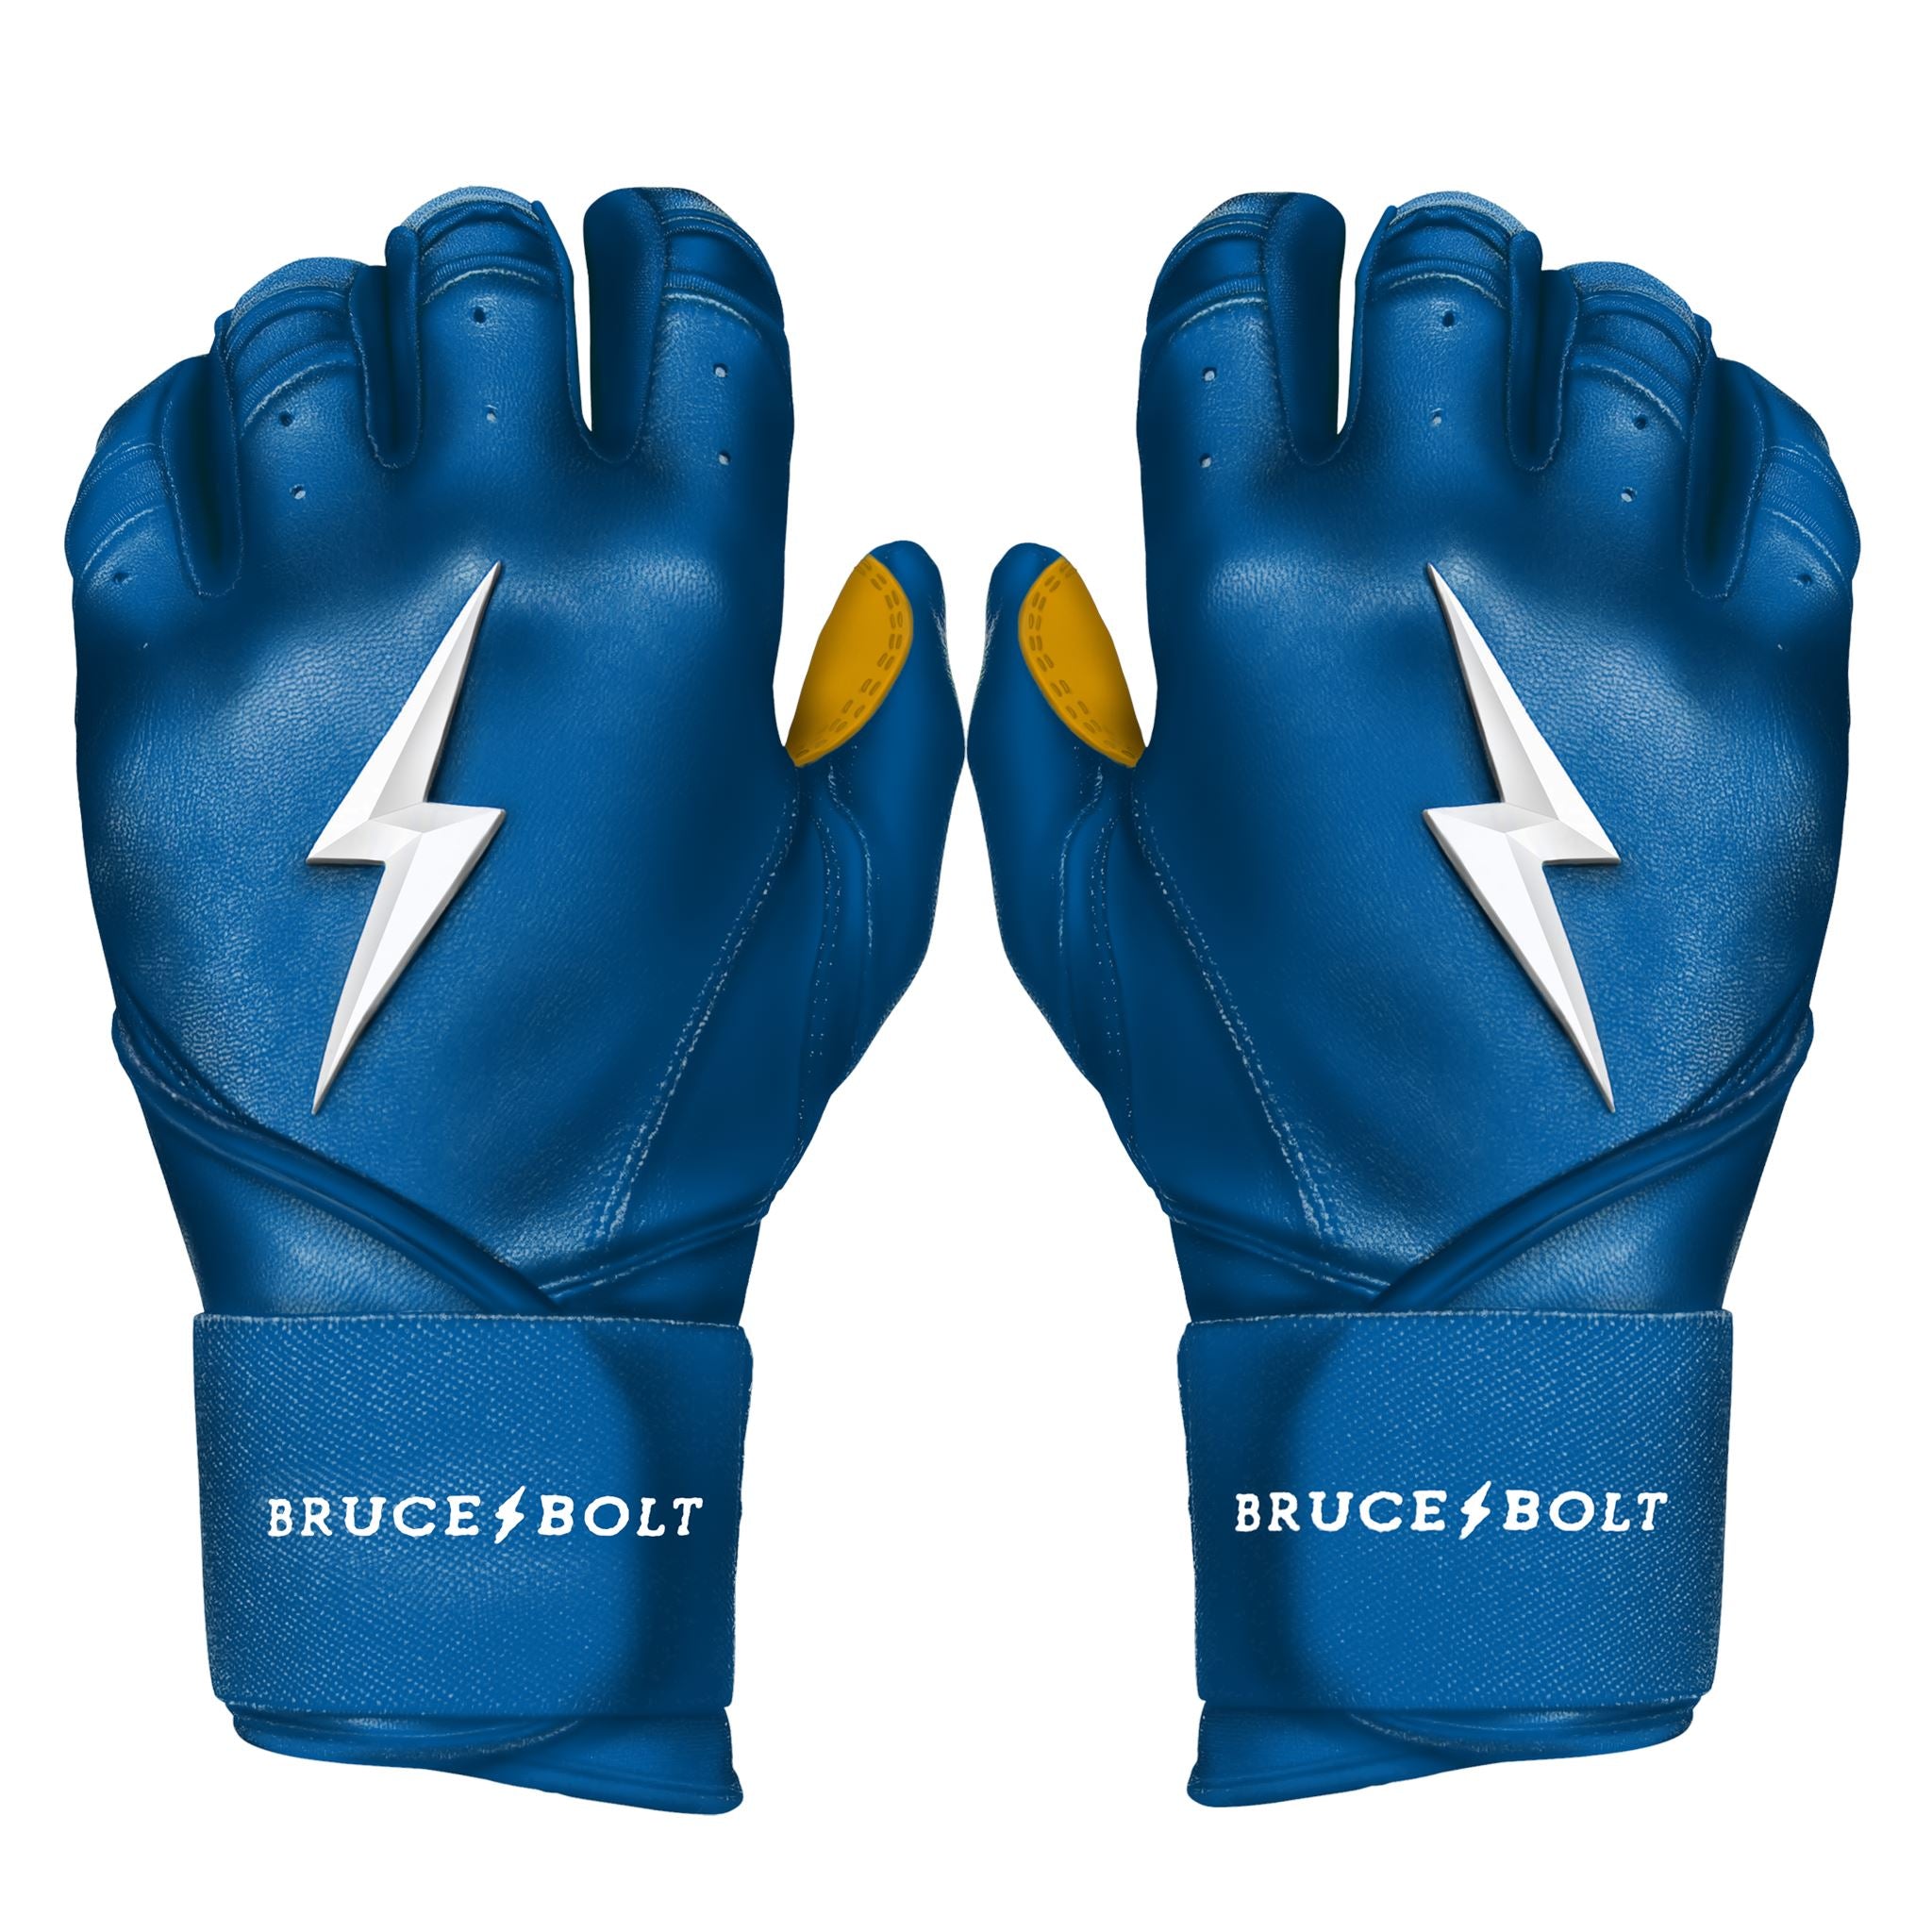 Behind Bear Mayer's creation of Bruce Bolt batting gloves